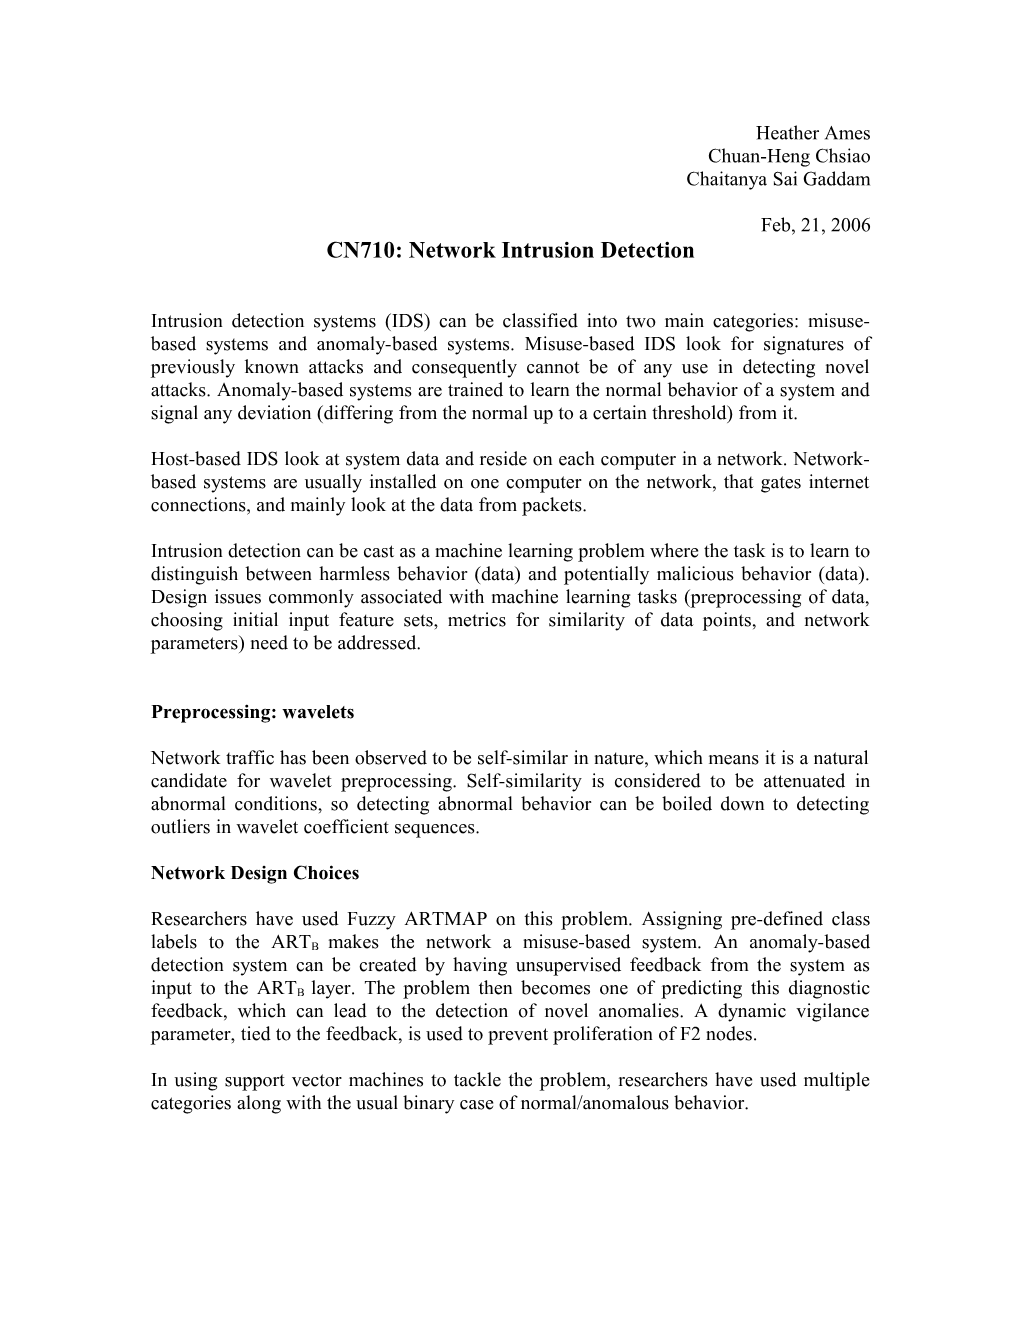 CN710: Network Intrusion Detection